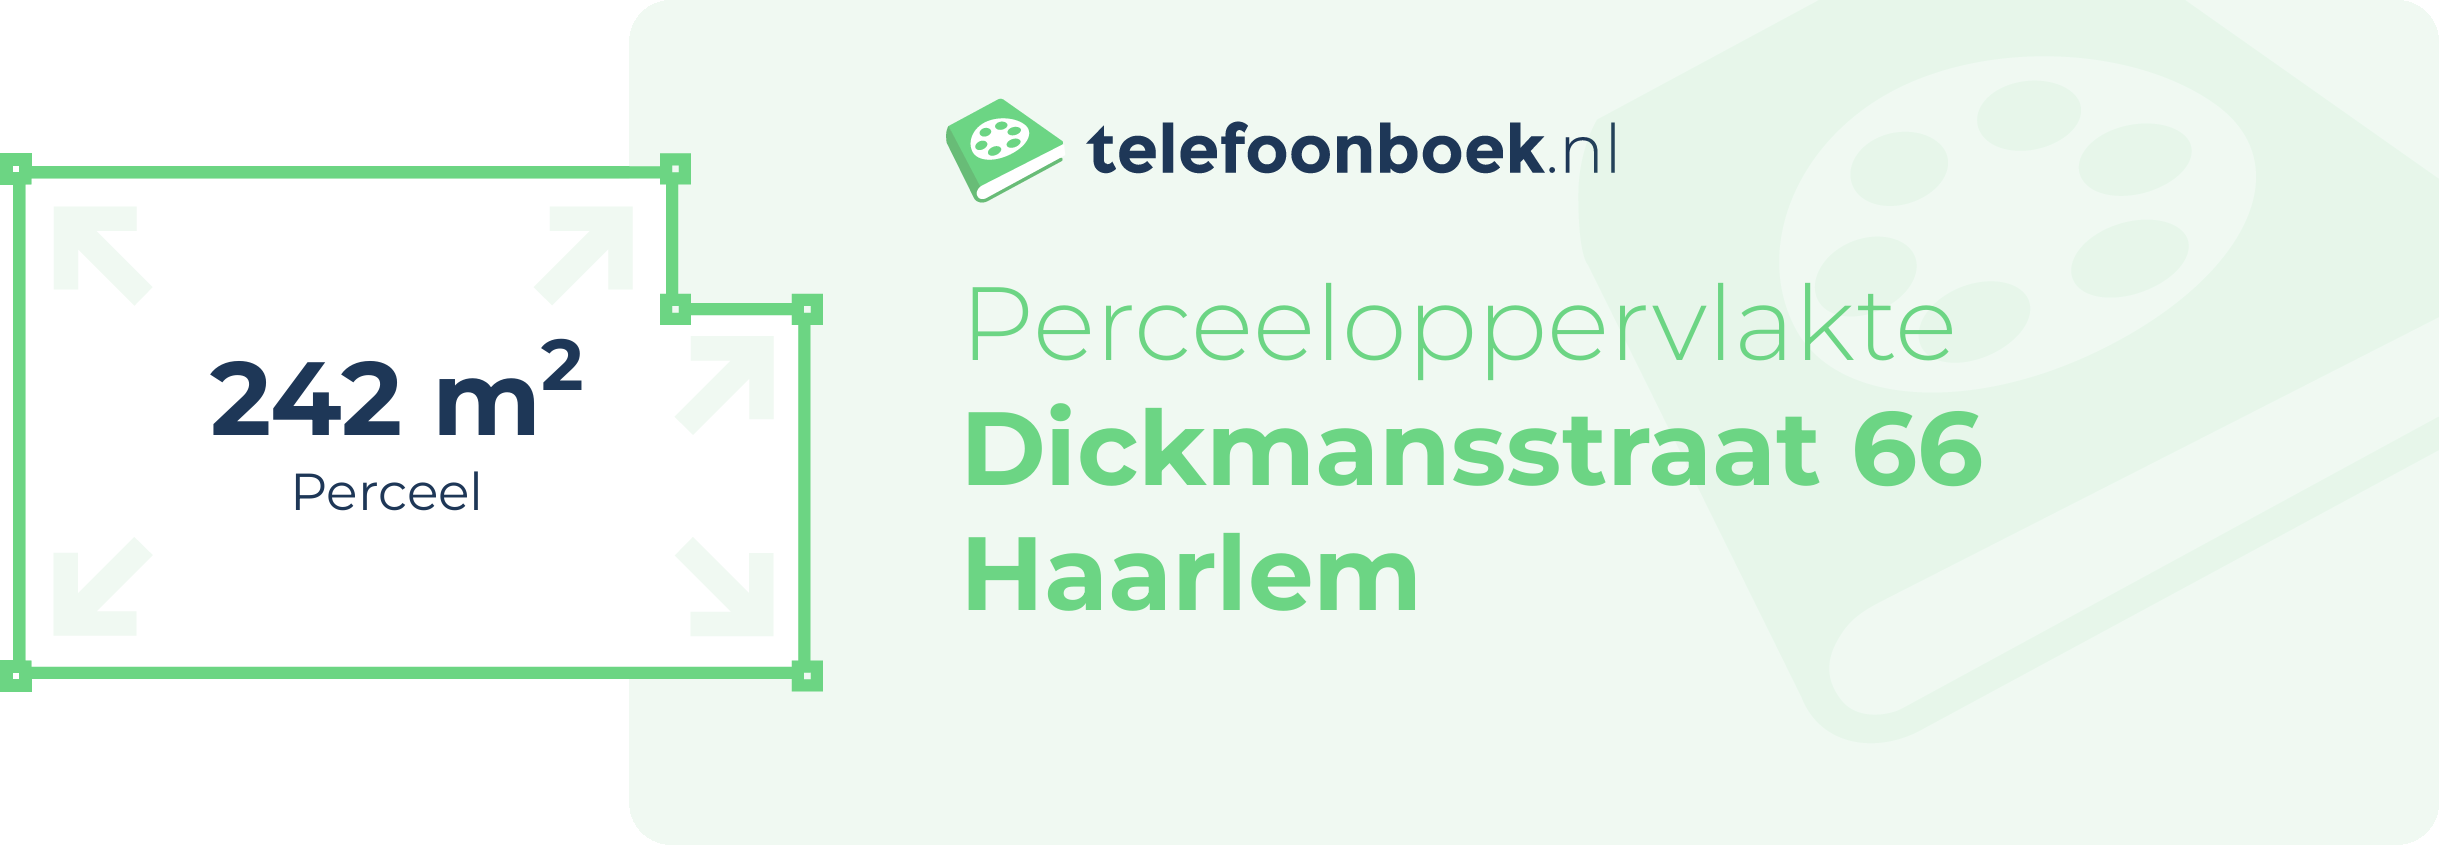 Perceeloppervlakte Dickmansstraat 66 Haarlem